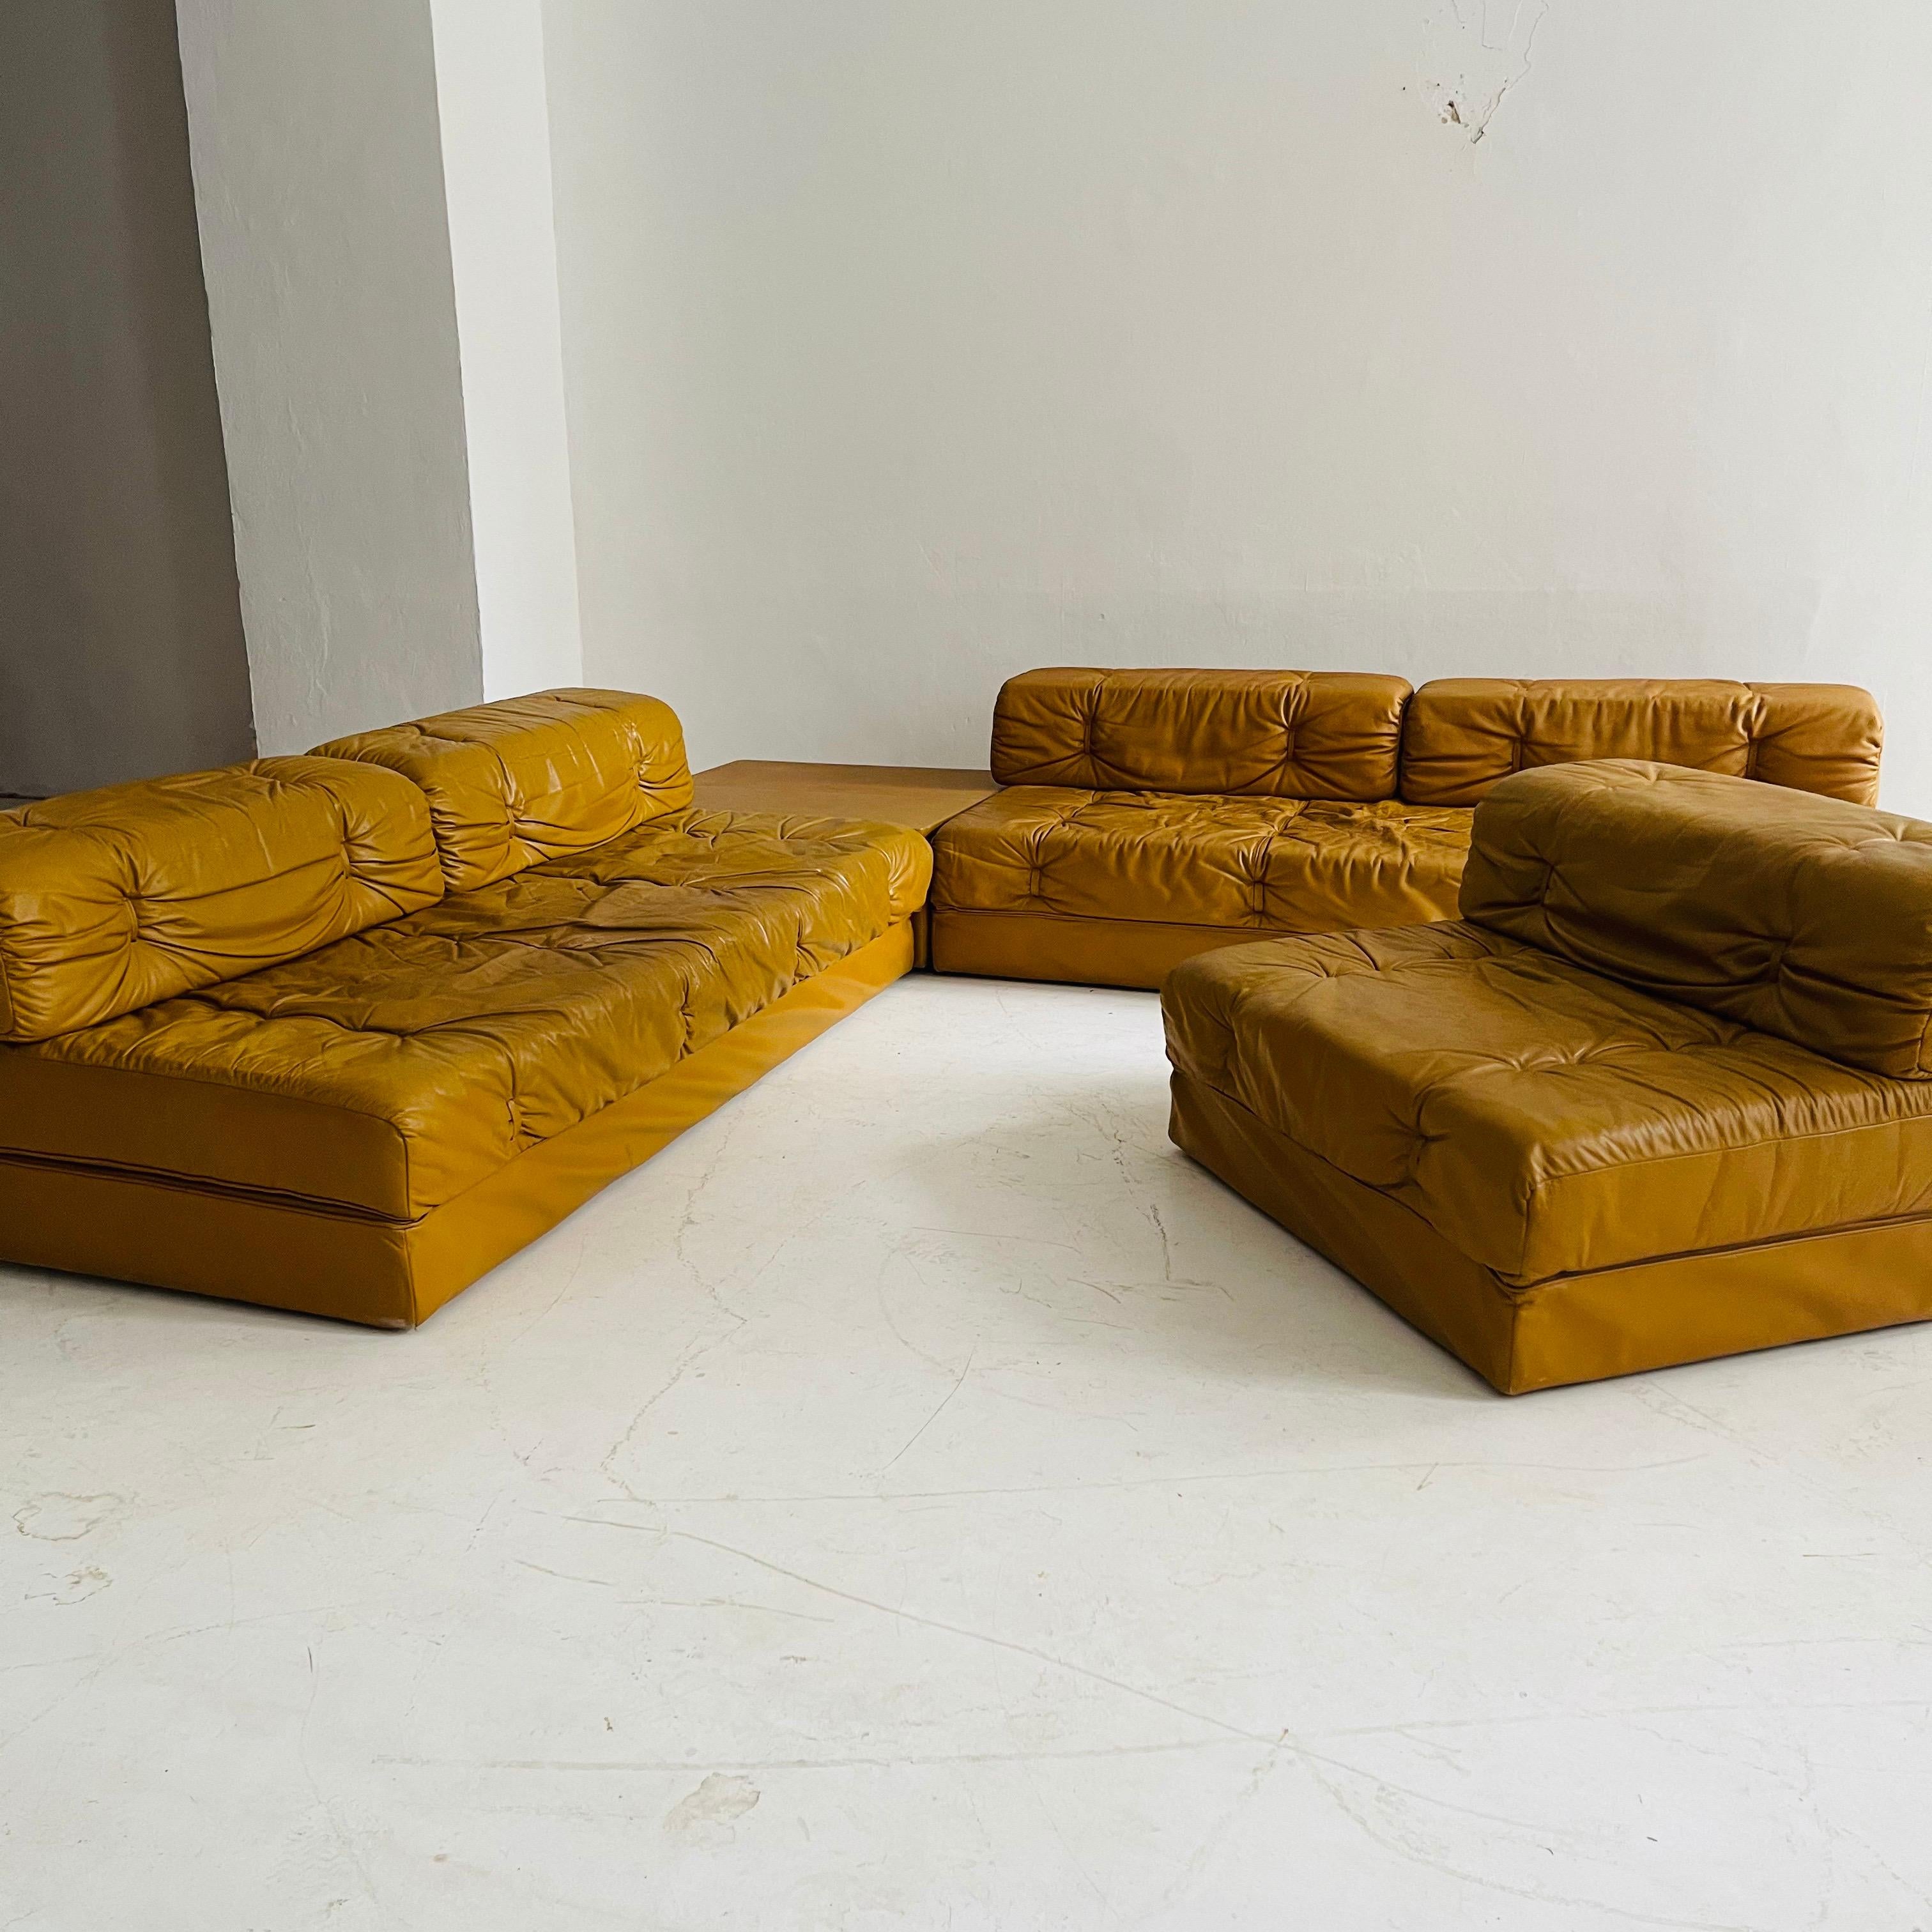 Wittmann Atrium Cognac Leather Living Room Suite Sofa Daybeds, Austria, 1970s For Sale 9